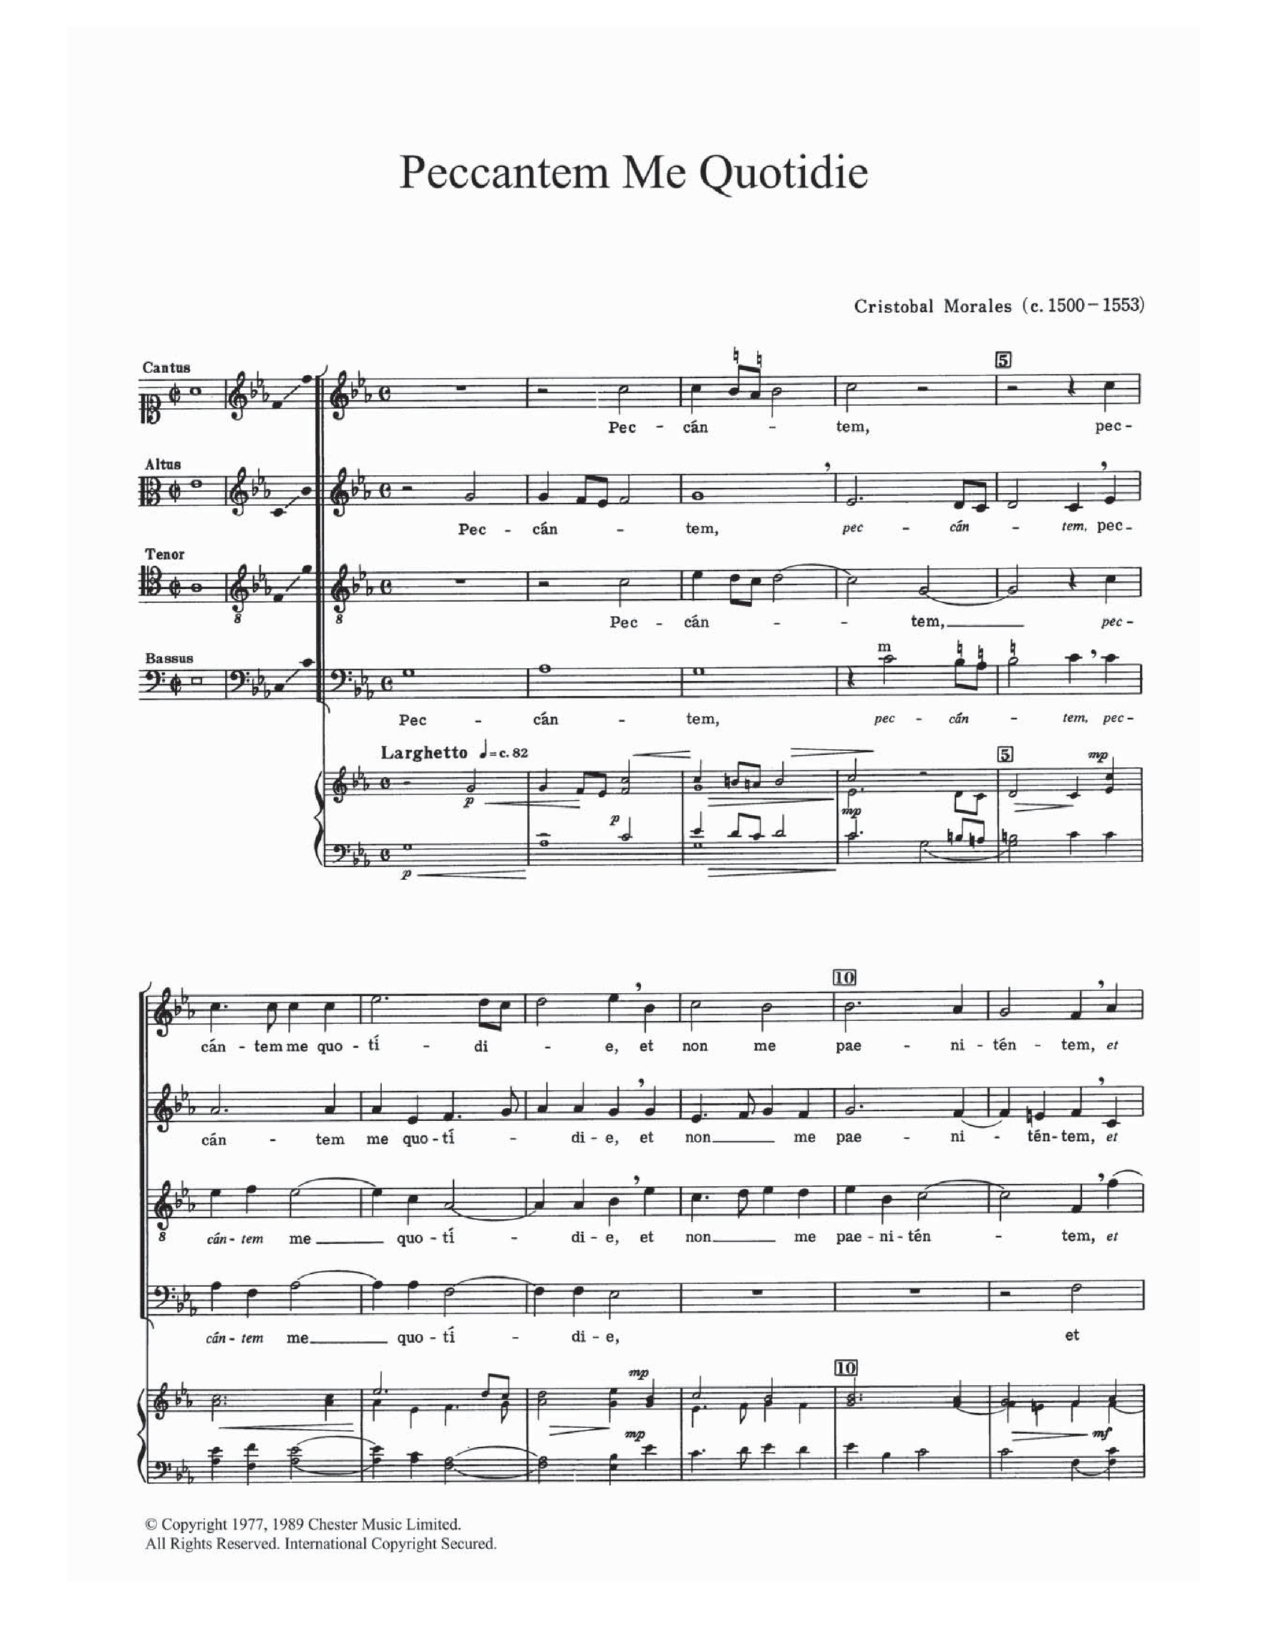 Cristobal de Morales Peccantem Me Quotidie Sheet Music Notes & Chords for SATB - Download or Print PDF